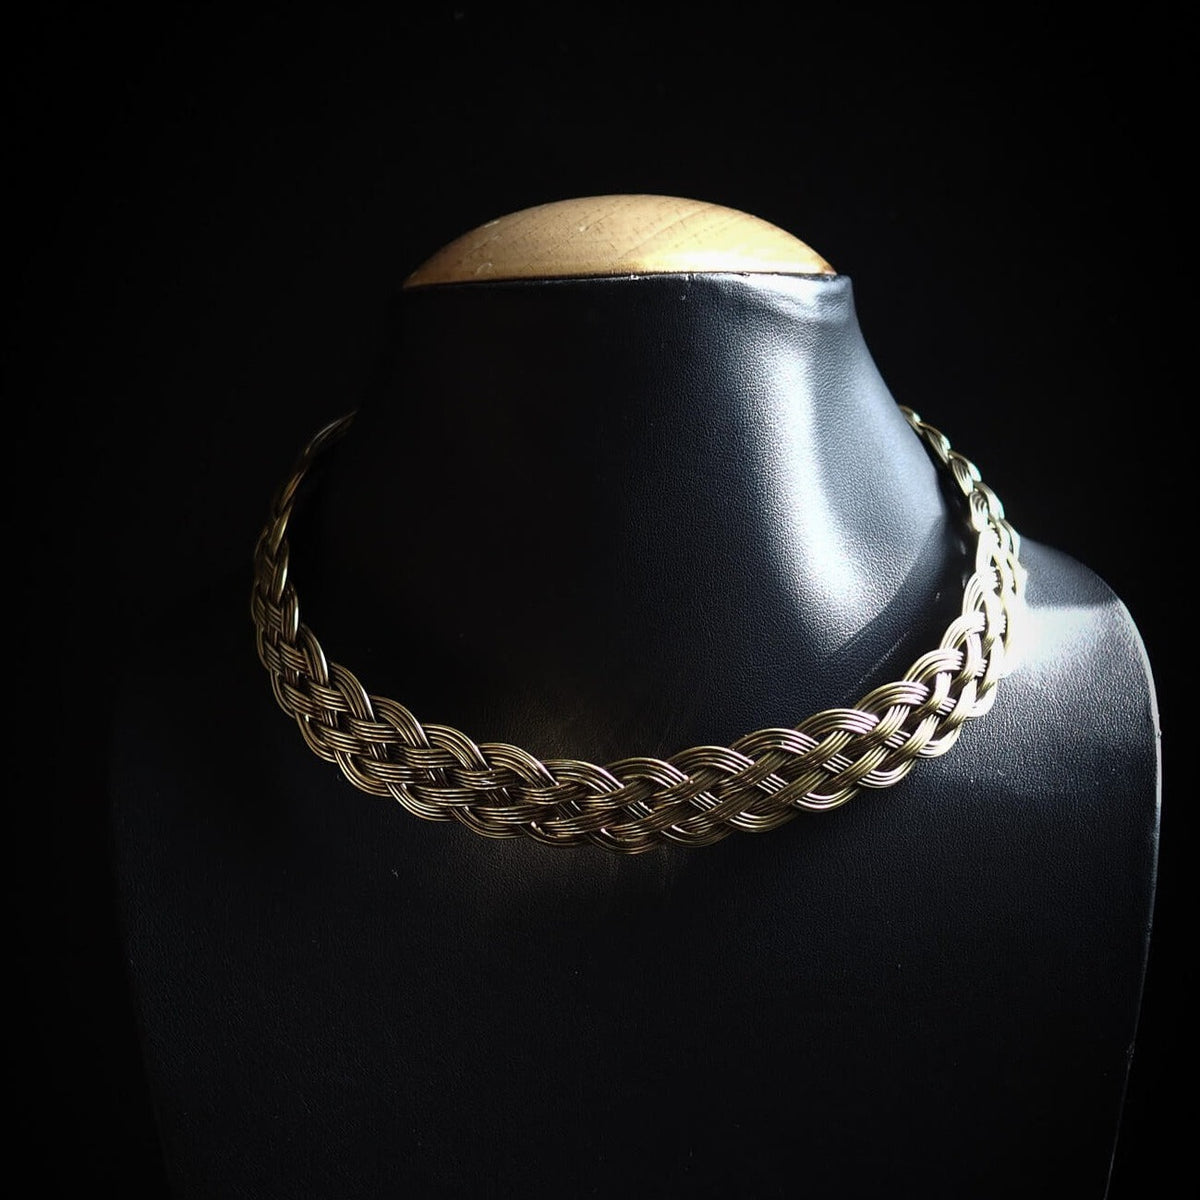 Braided necklace in brass.